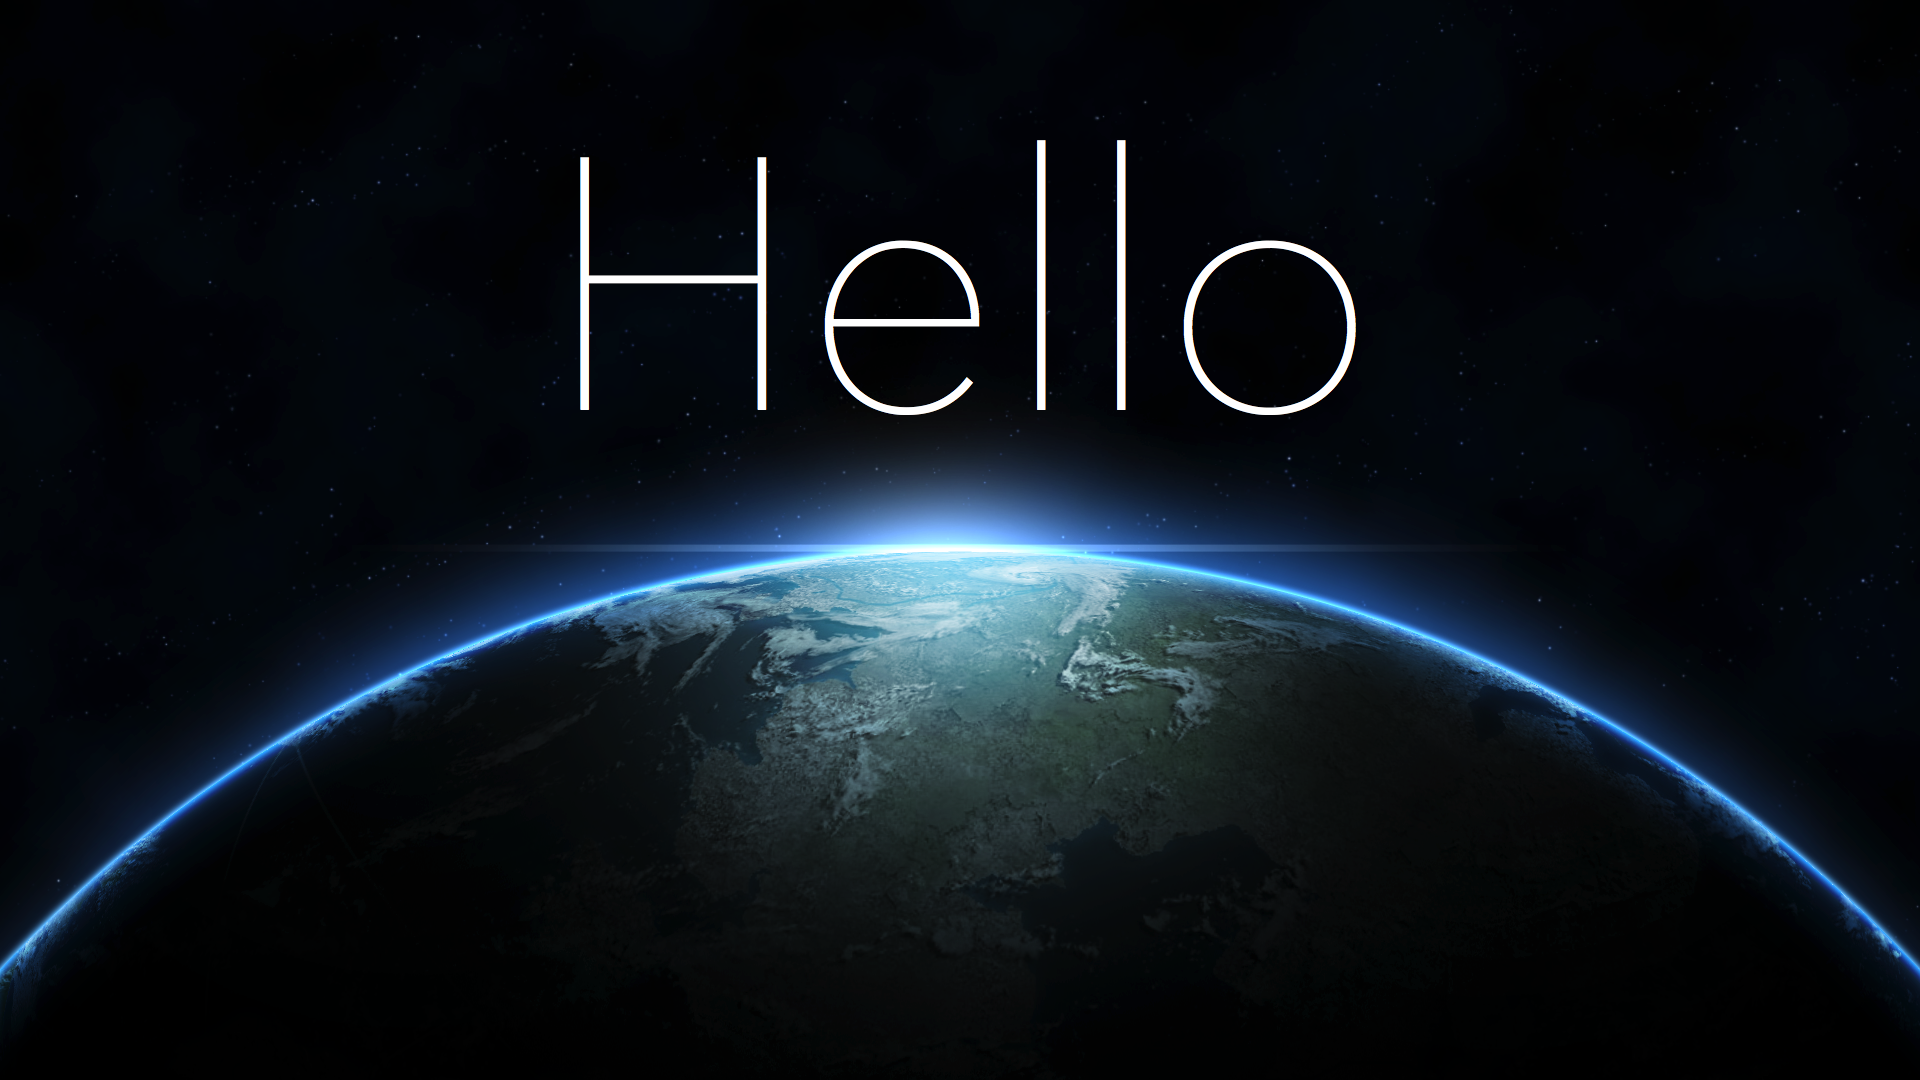 Hello World: A web presence